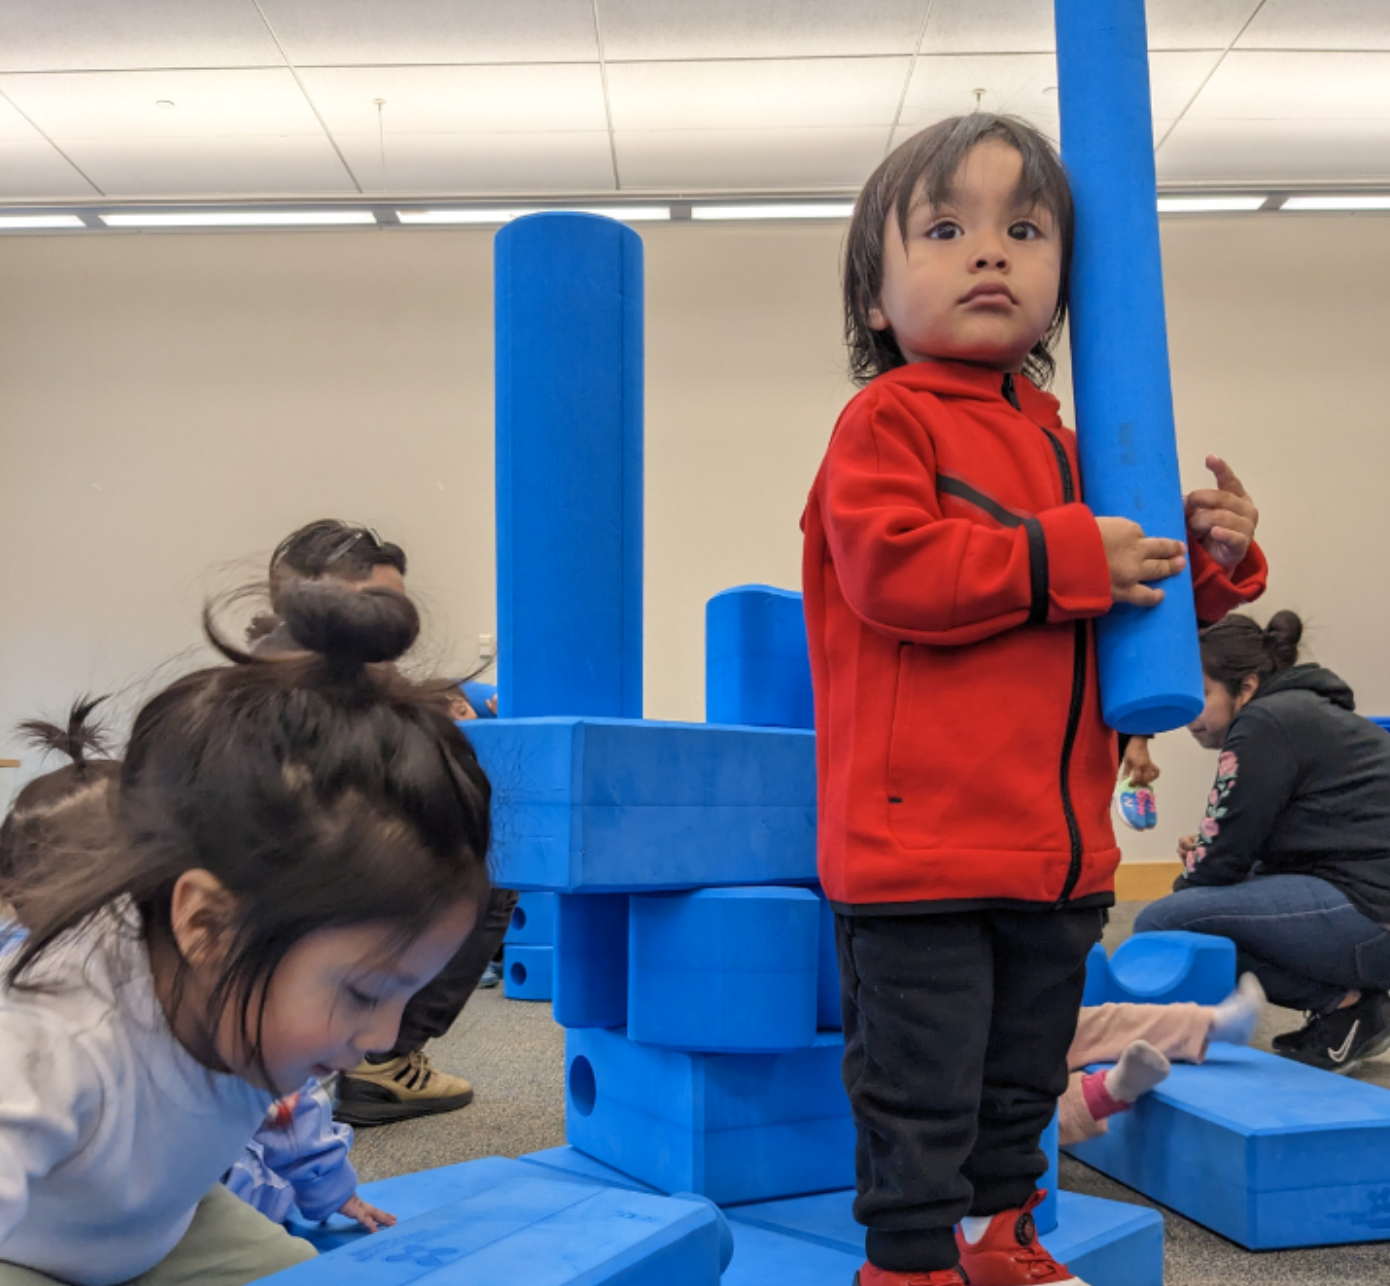 Children play with big blue blocks